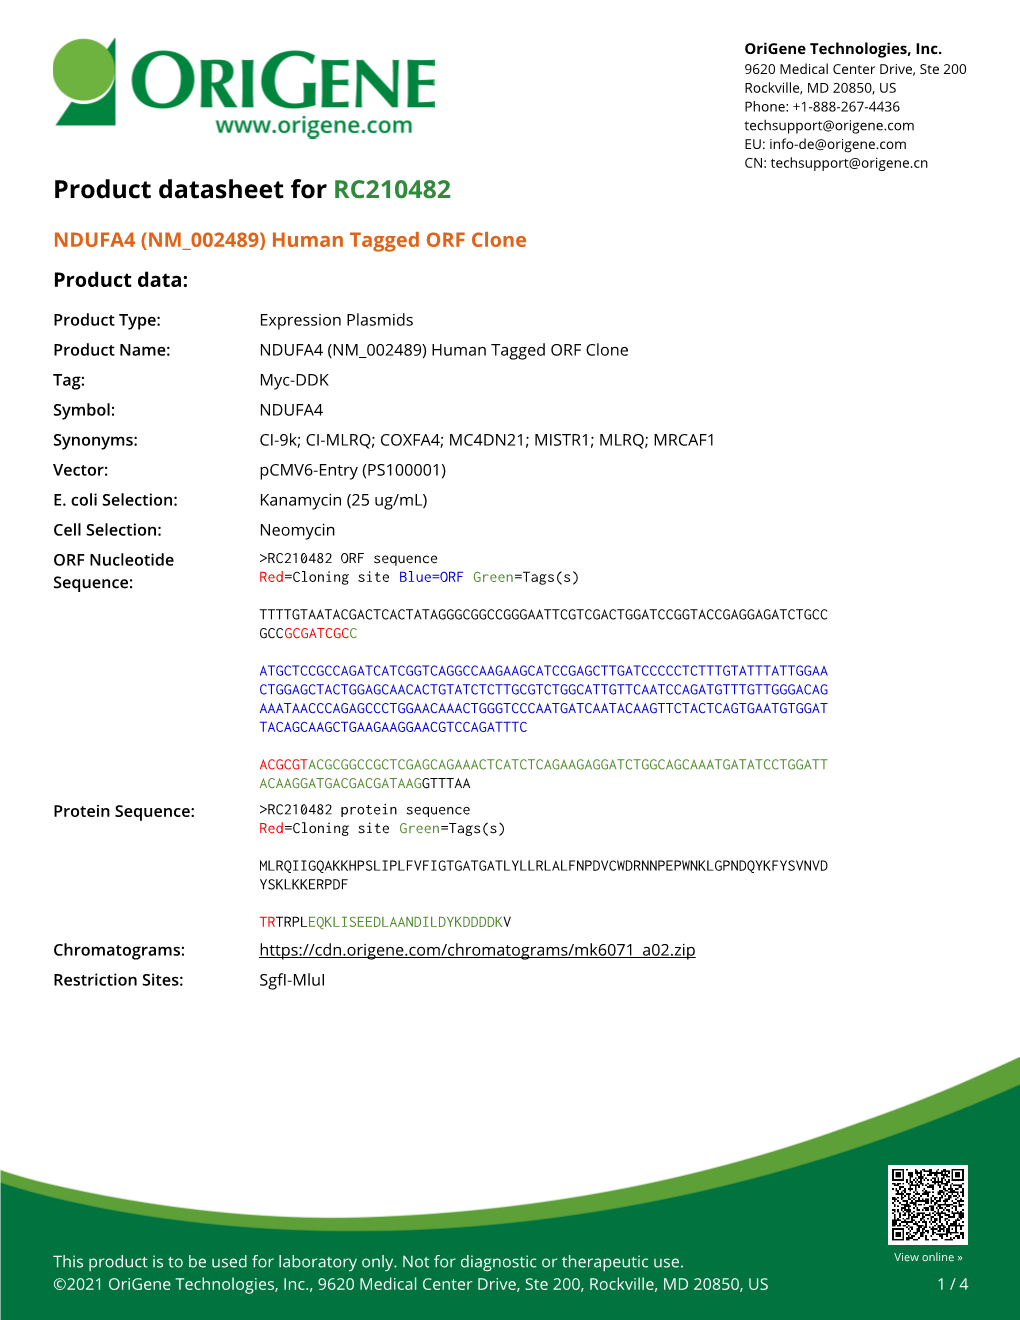 NDUFA4 (NM 002489) Human Tagged ORF Clone Product Data